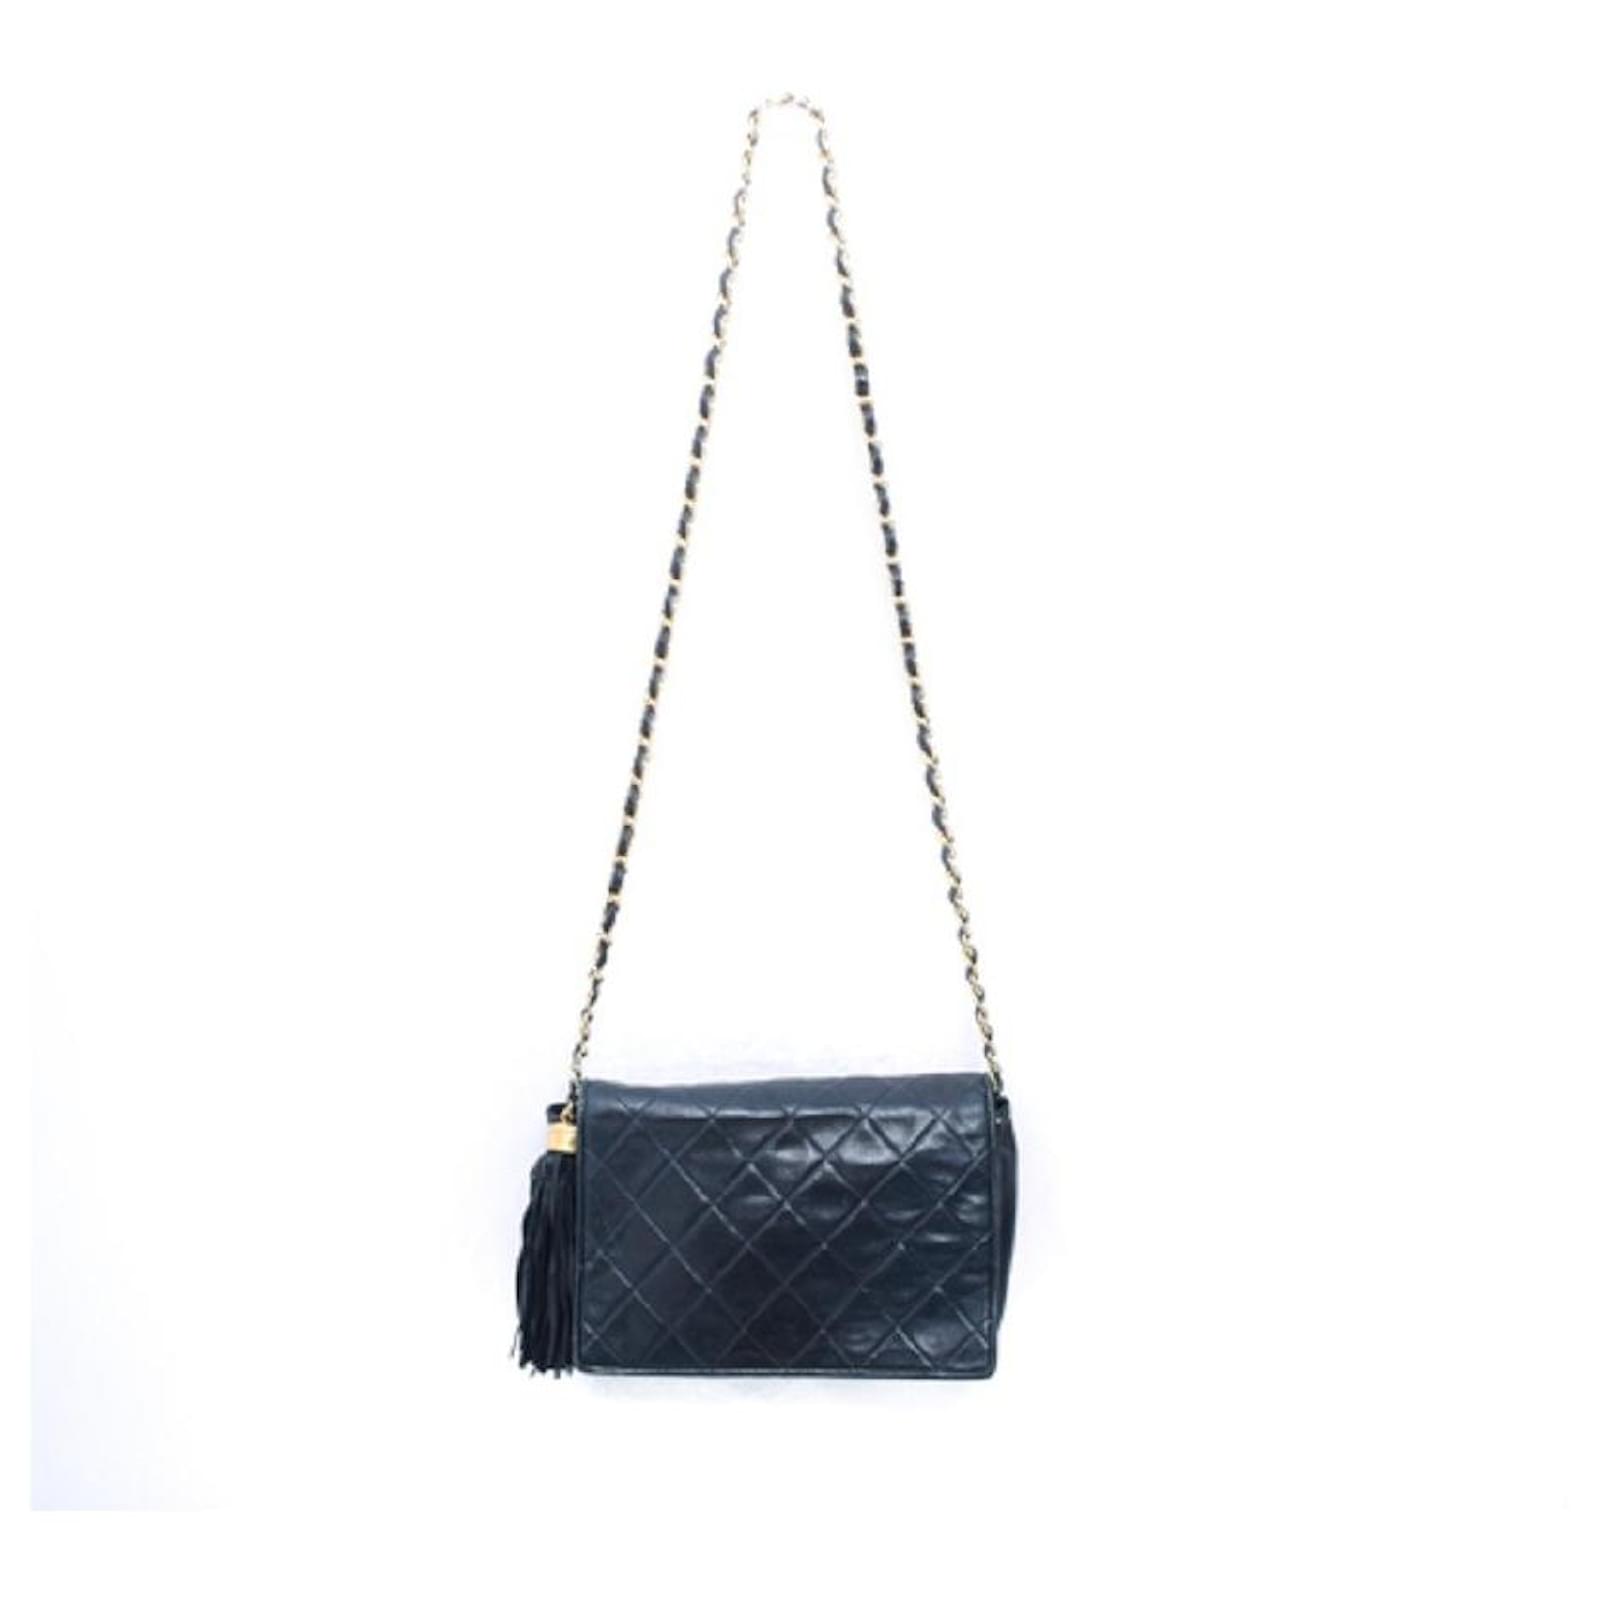 MINT. Vintage CHANEL blue lambskin chain shoulder clutch bag with